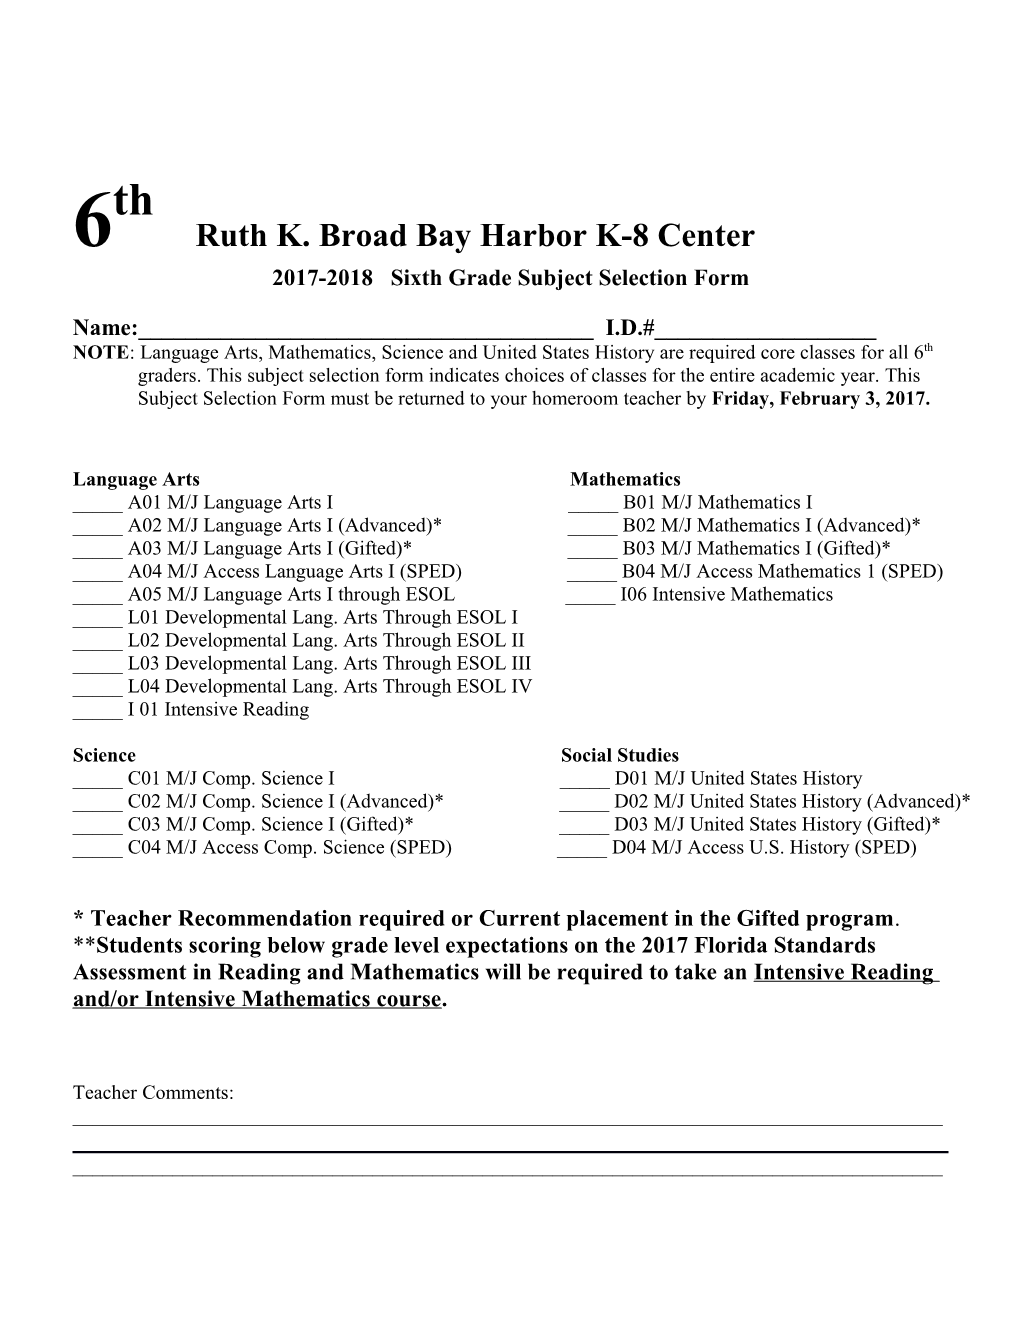 6Th Ruth K. Broad Bay Harbor K-8 Center